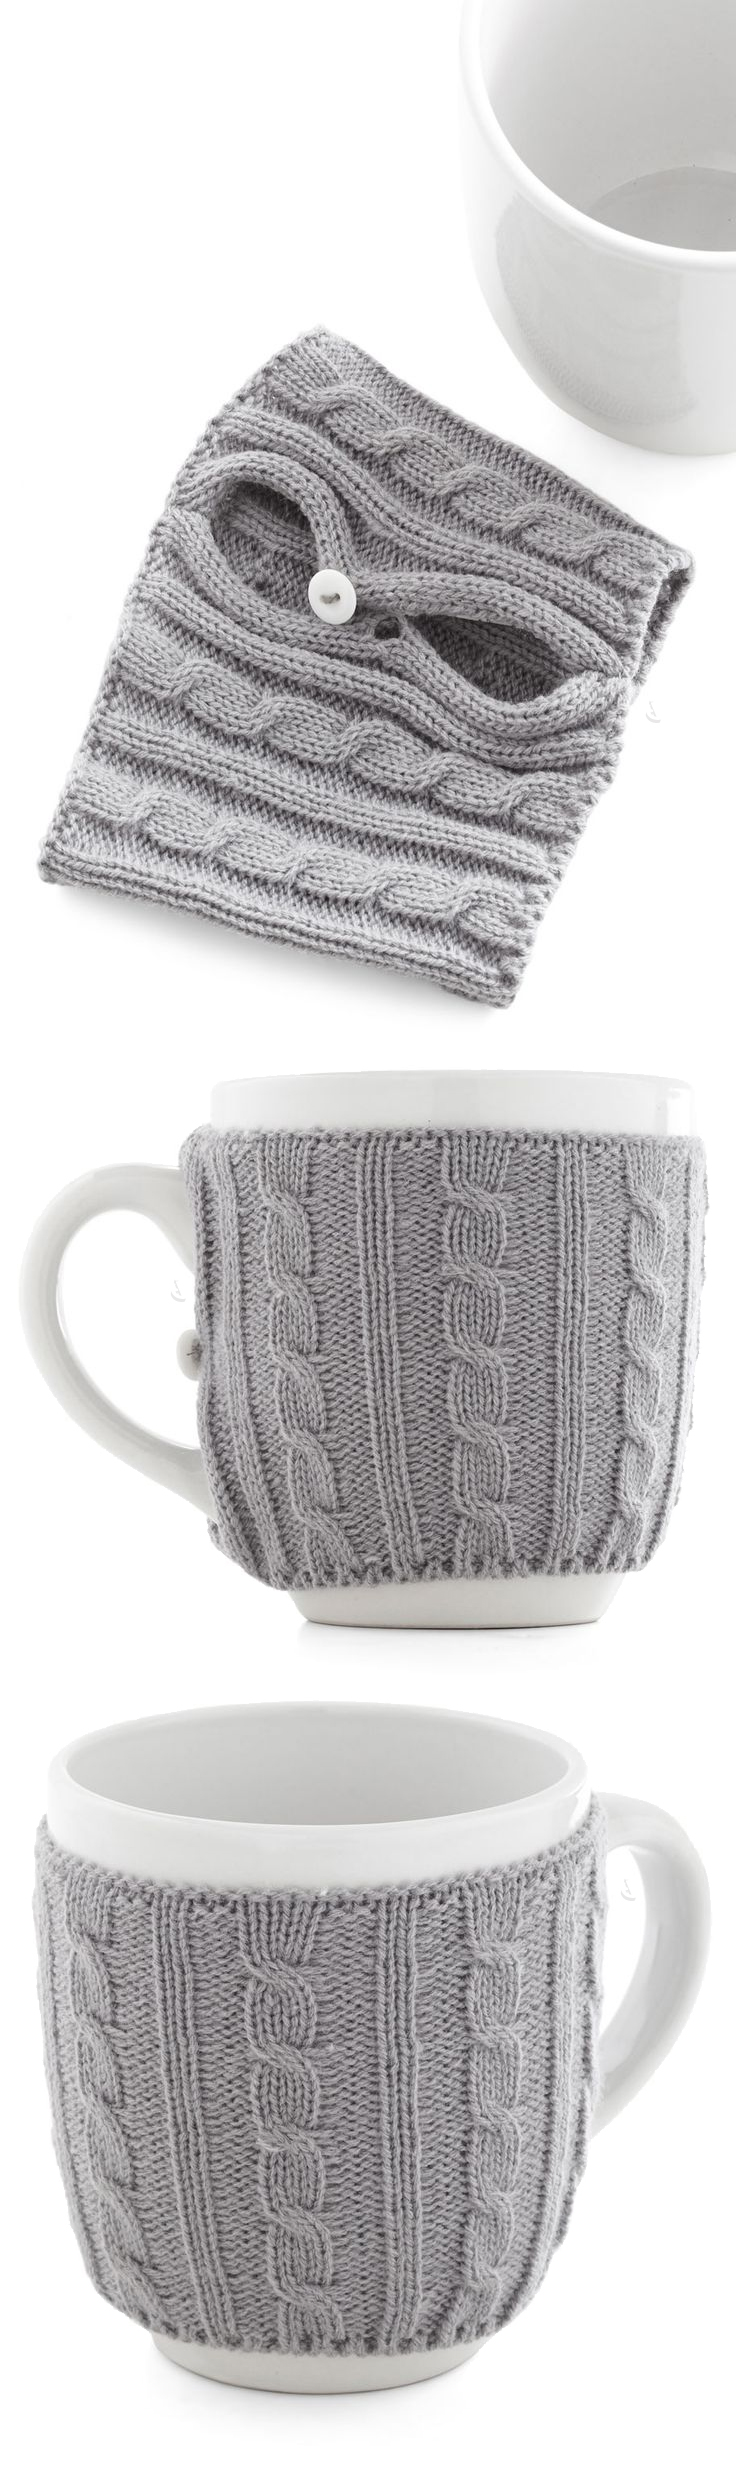 http://www.adesignerlife.net/wp-content/uploads/2014/11/2014-11-11-snug-mug-sweater.jpg